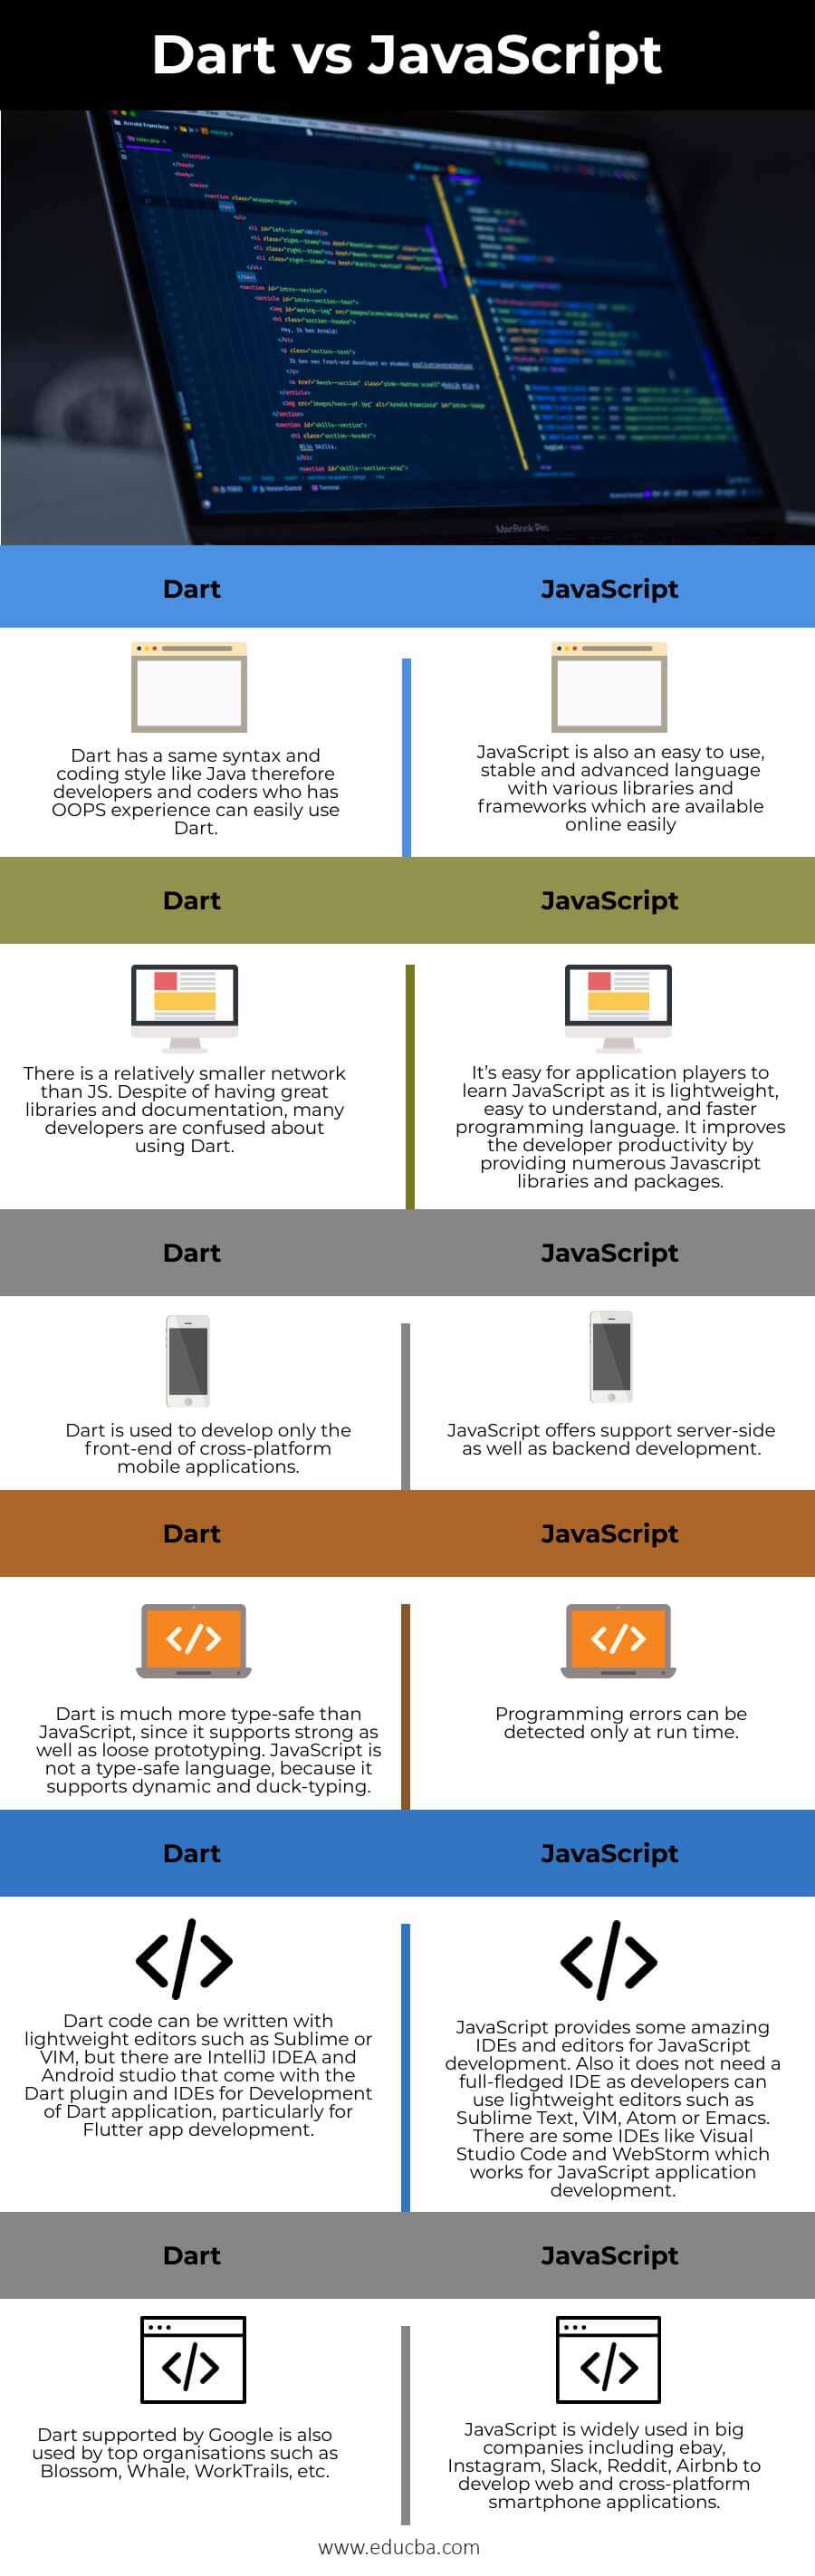 Dart-vs-JavaScript-info